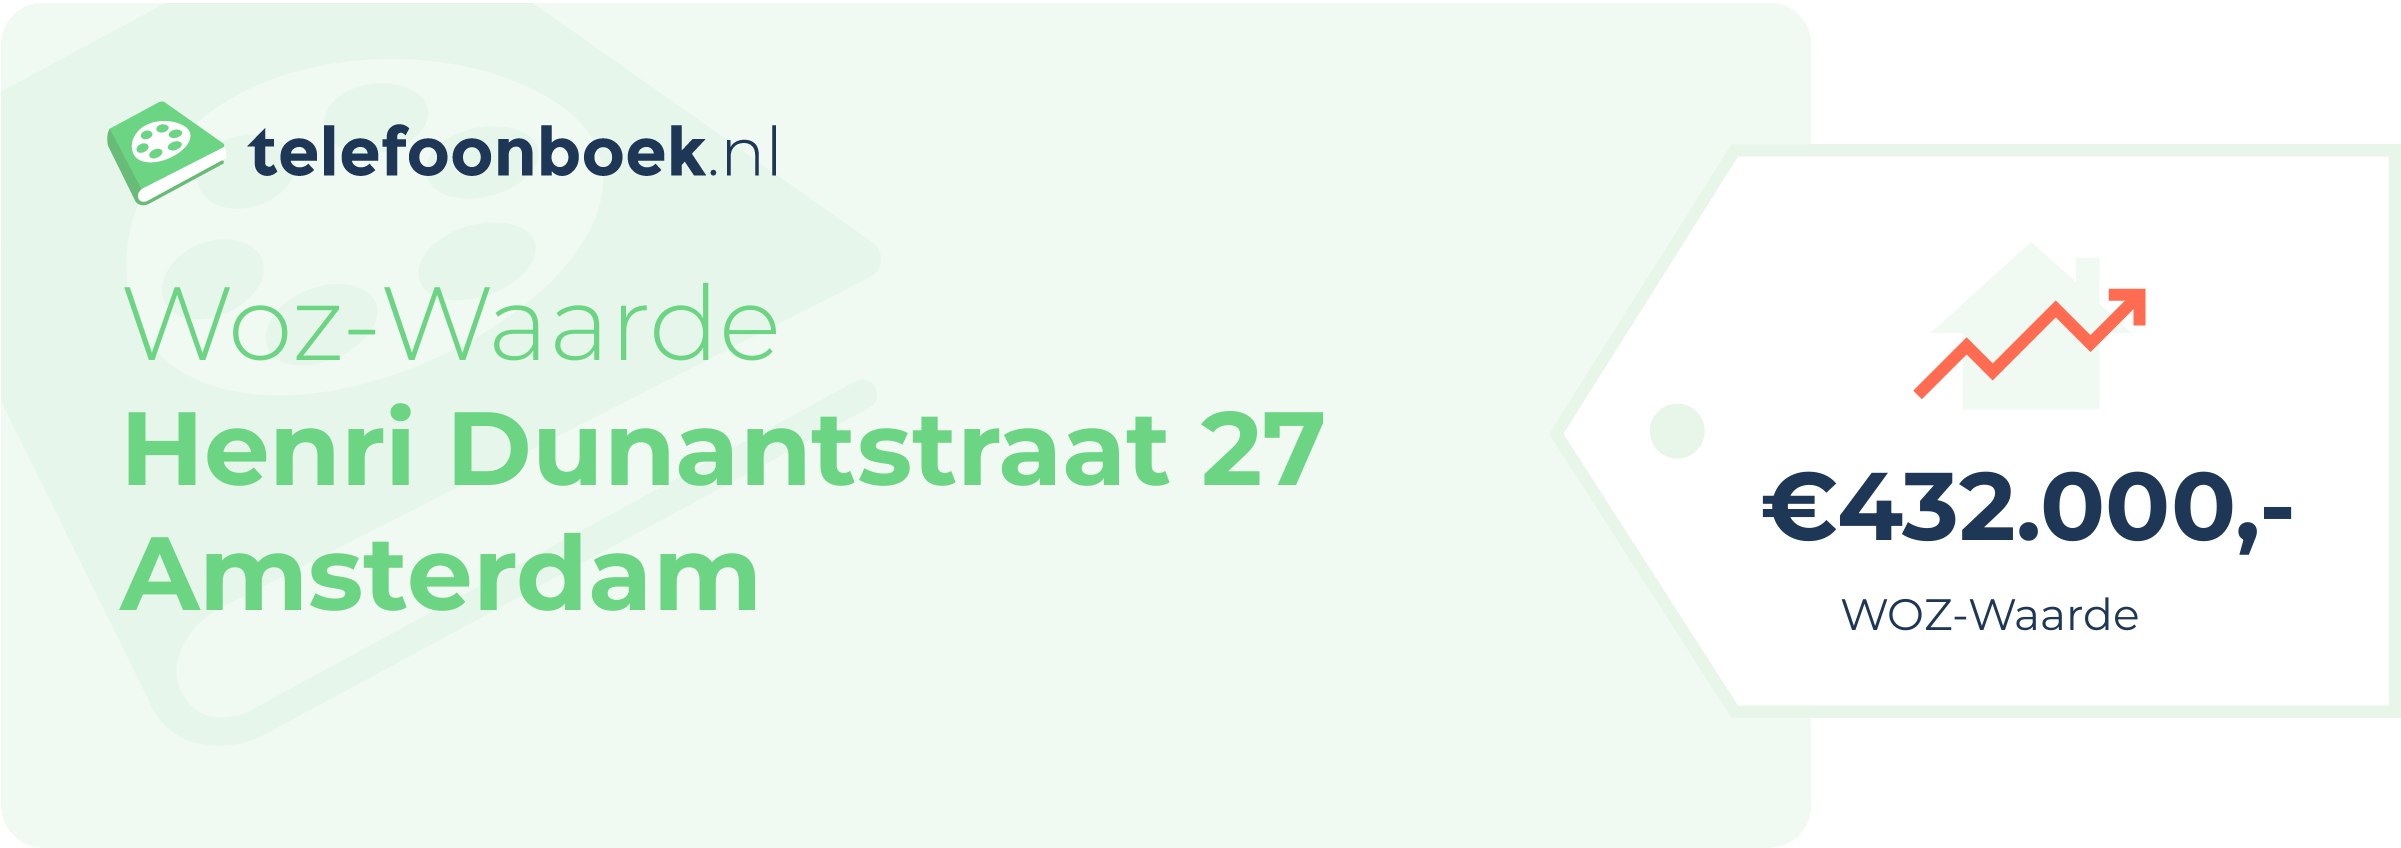 WOZ-waarde Henri Dunantstraat 27 Amsterdam